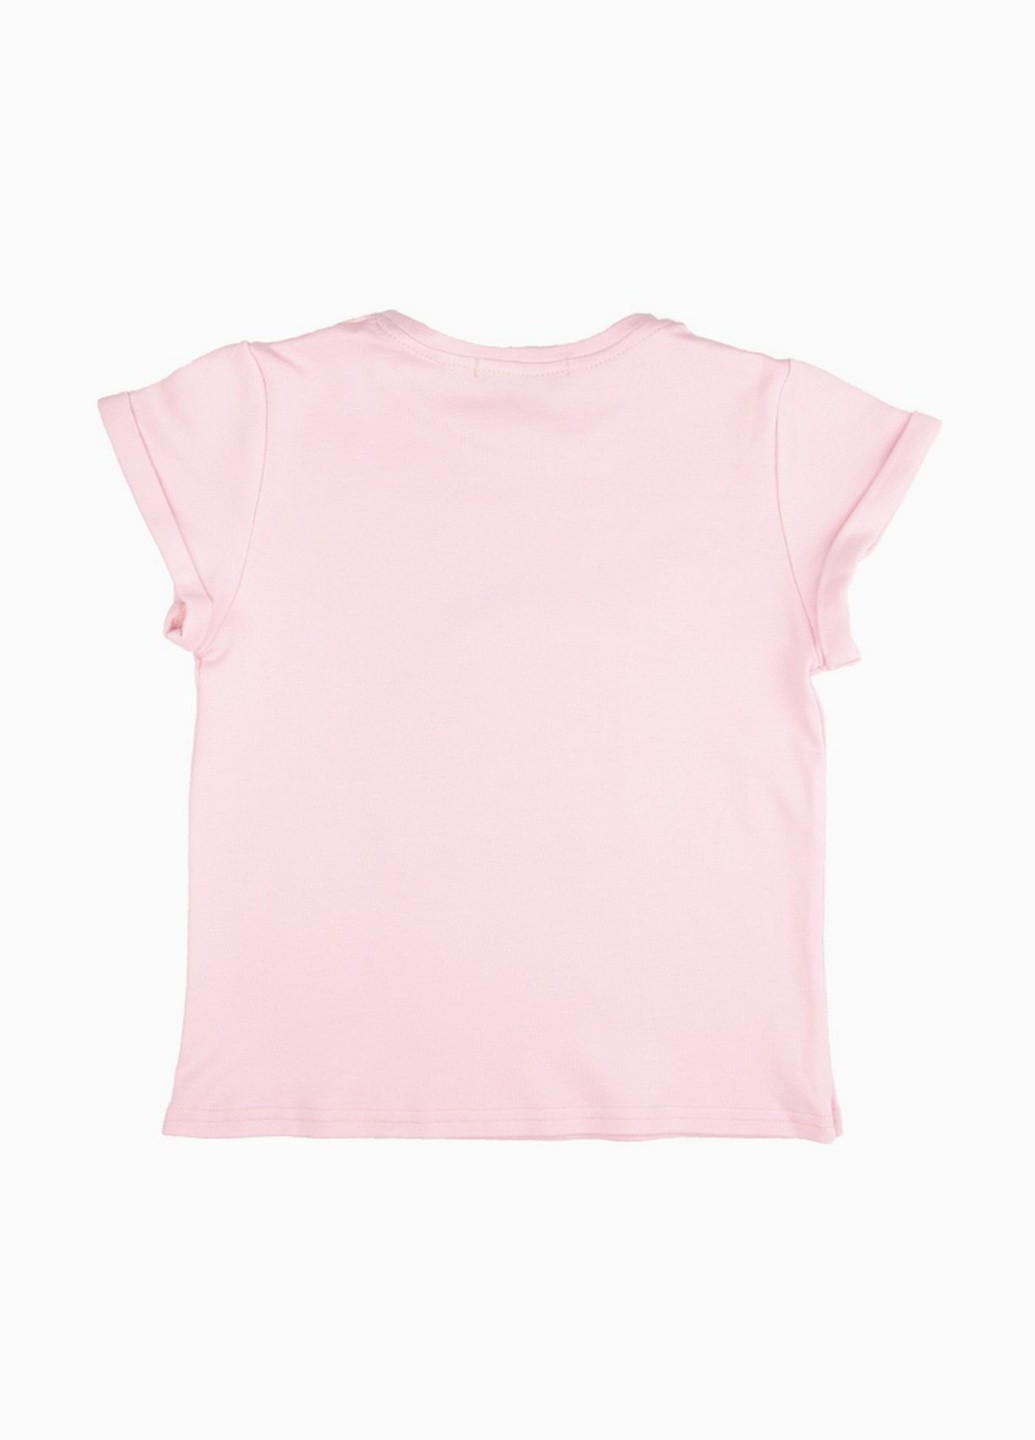 Розовая летняя футболка Yumster Unicorn